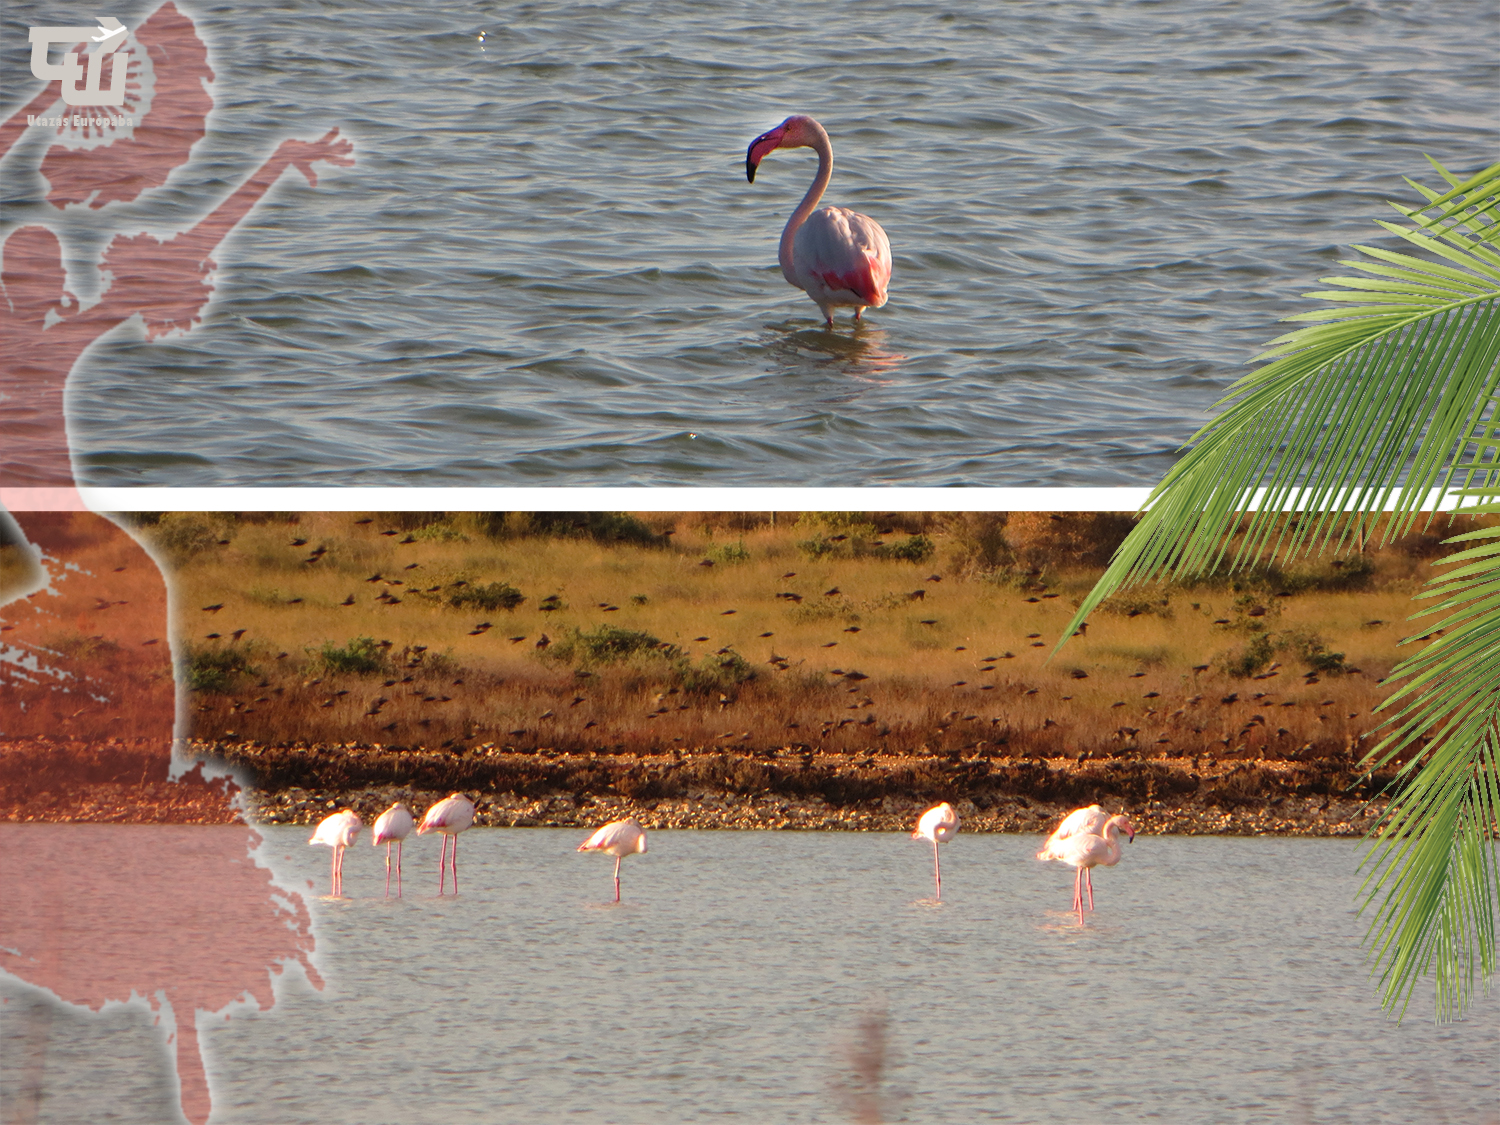 06_flamingo_flamenco_alicante_spanyolorszag_spain_espa_a.jpg